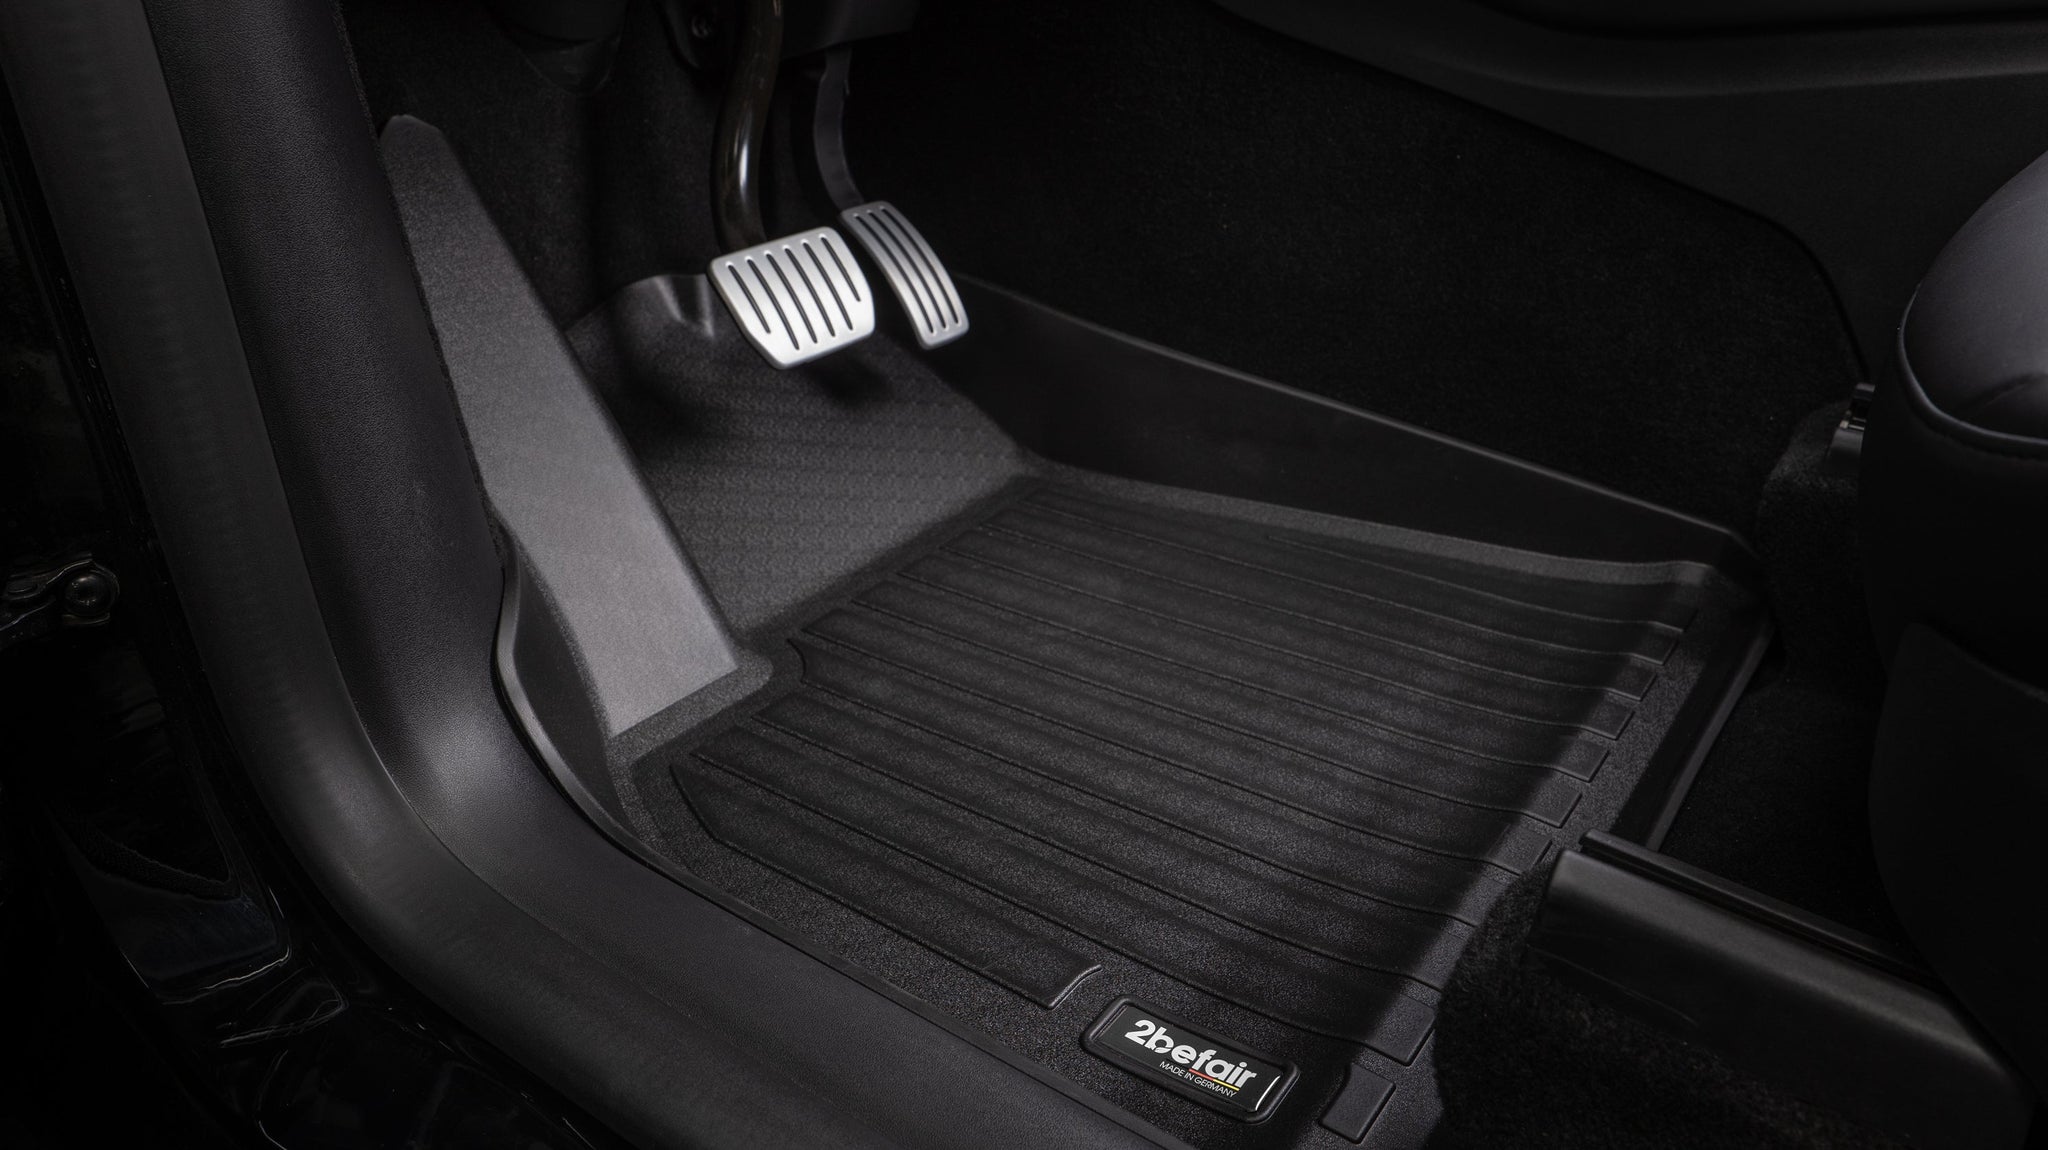 2befair rubber mats set interior for the Tesla Model Y